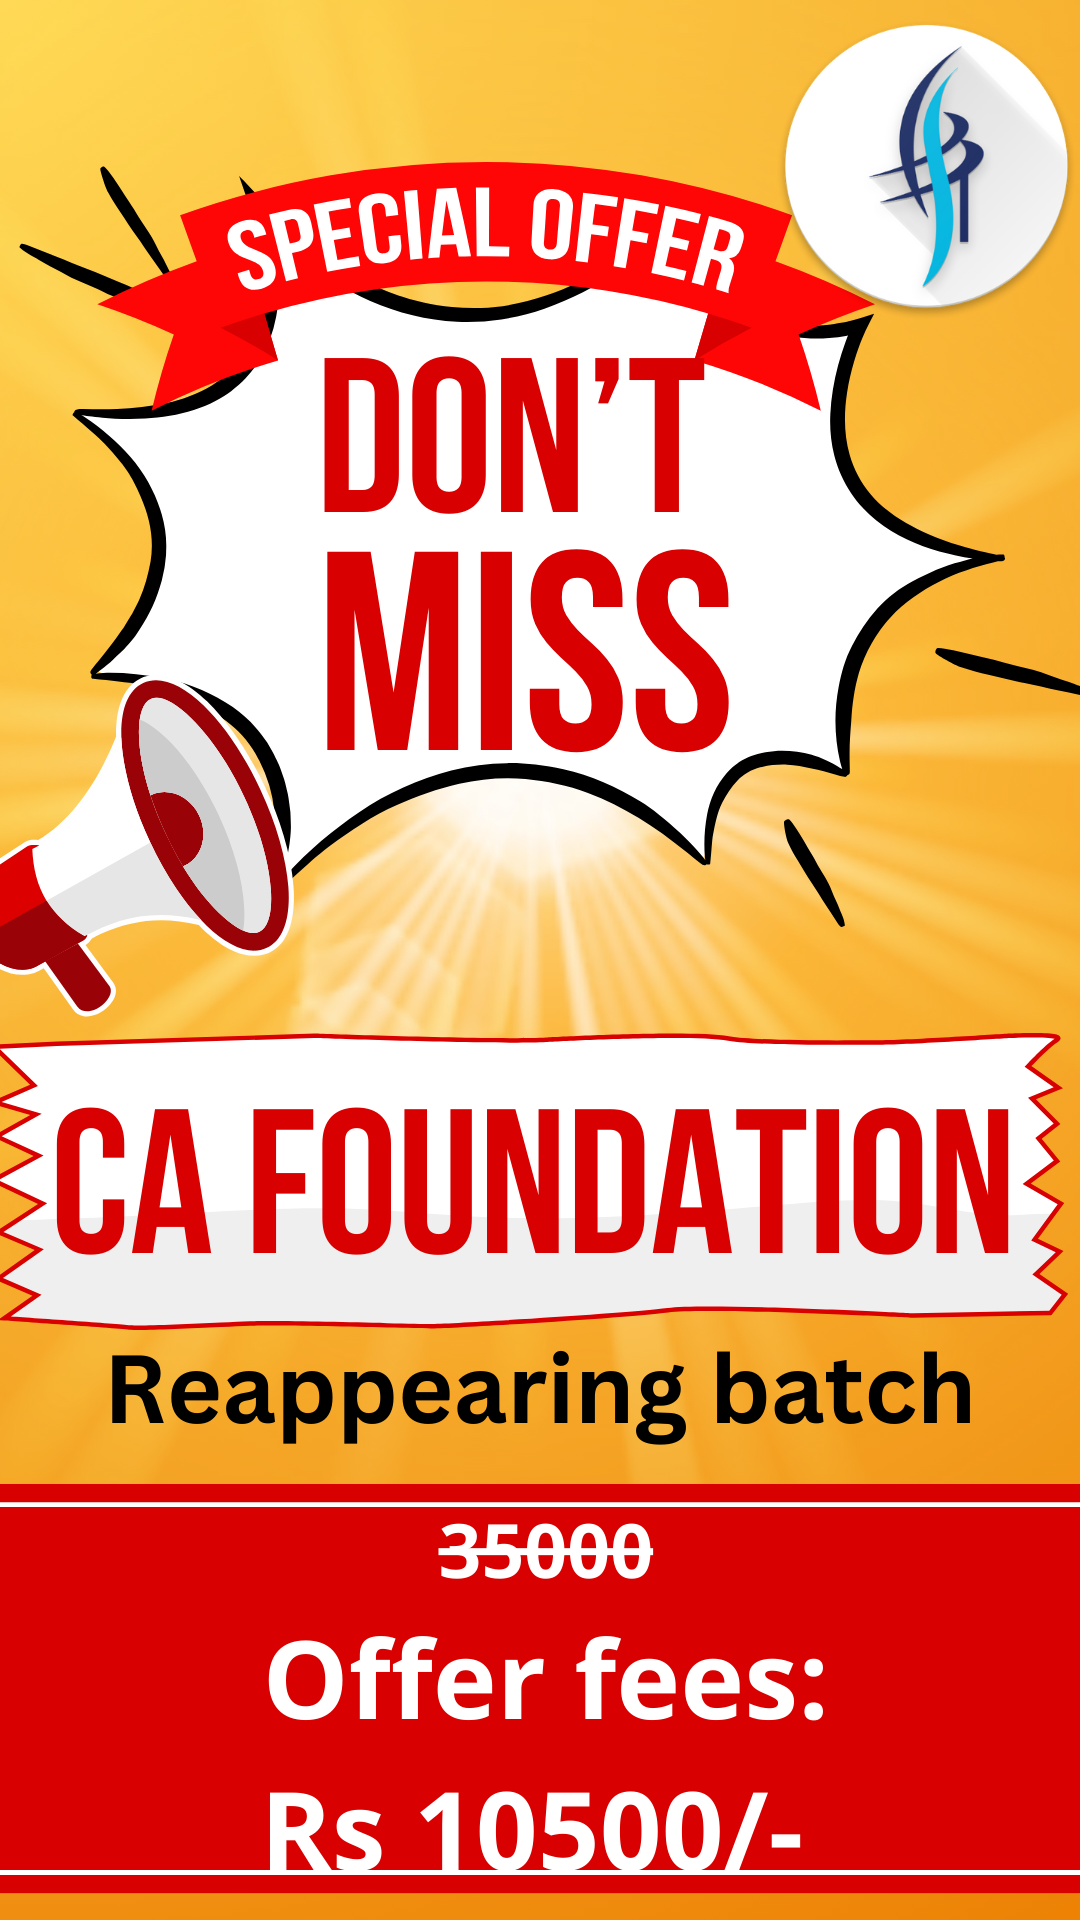 Ca foundation offer